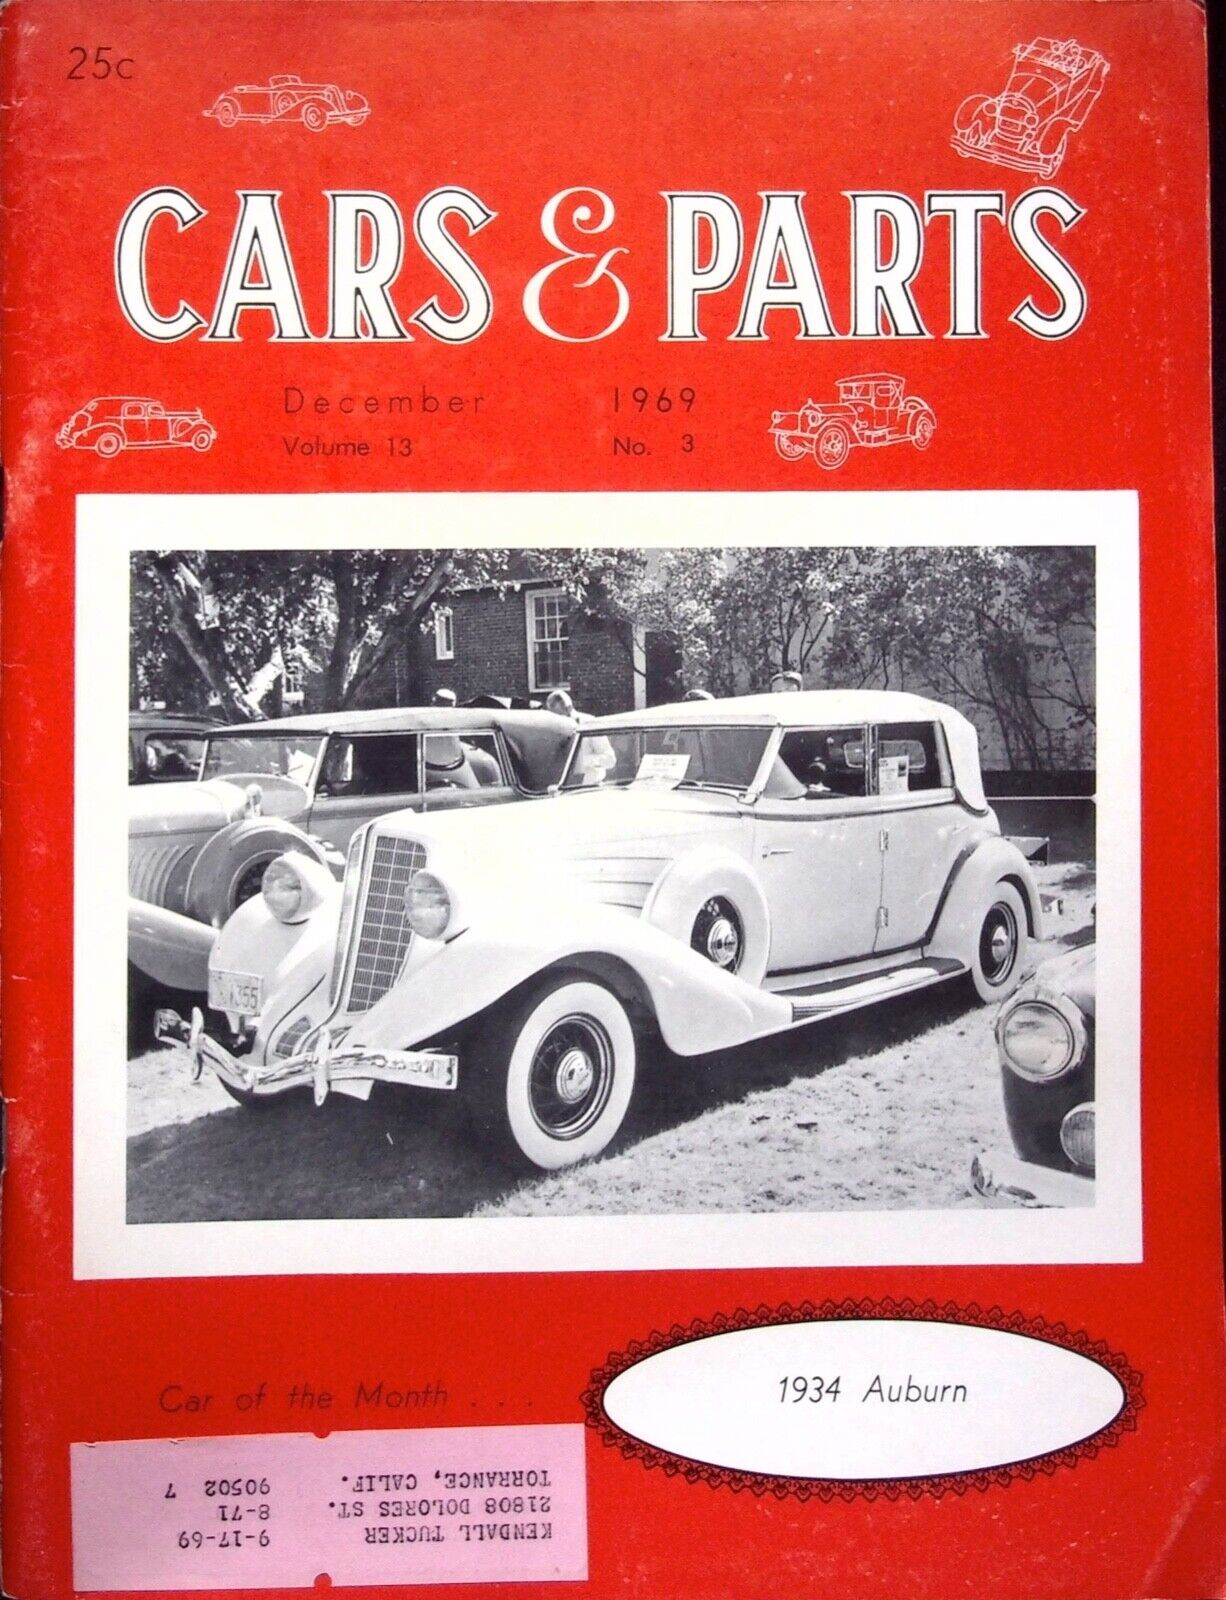 VINTAGE 1934 AUBURN - CAR & PARTS MAGAZINE, DECEMBER 1969 VOLUME 13 NO. 3